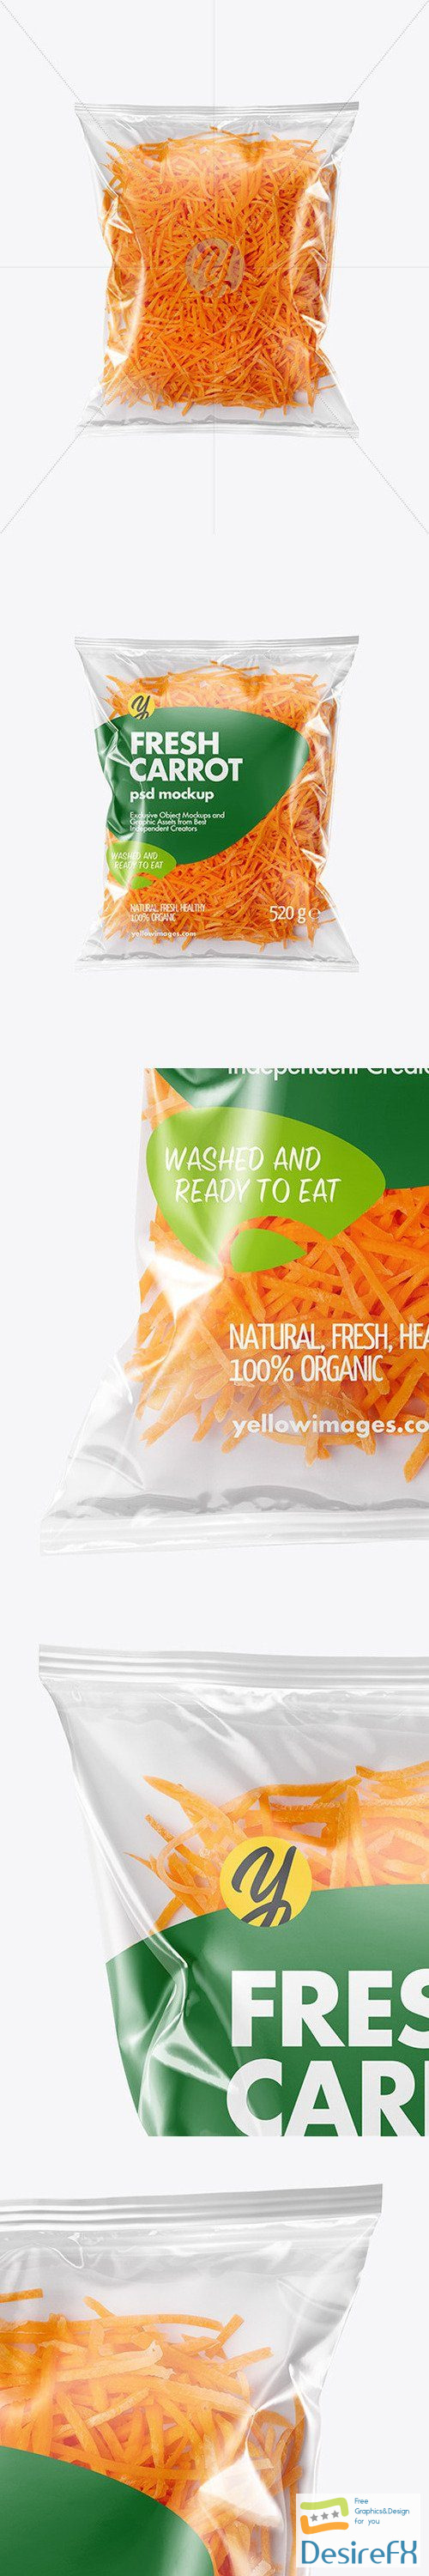 Plastic Bag With Shredded Carrot Mockup 46281